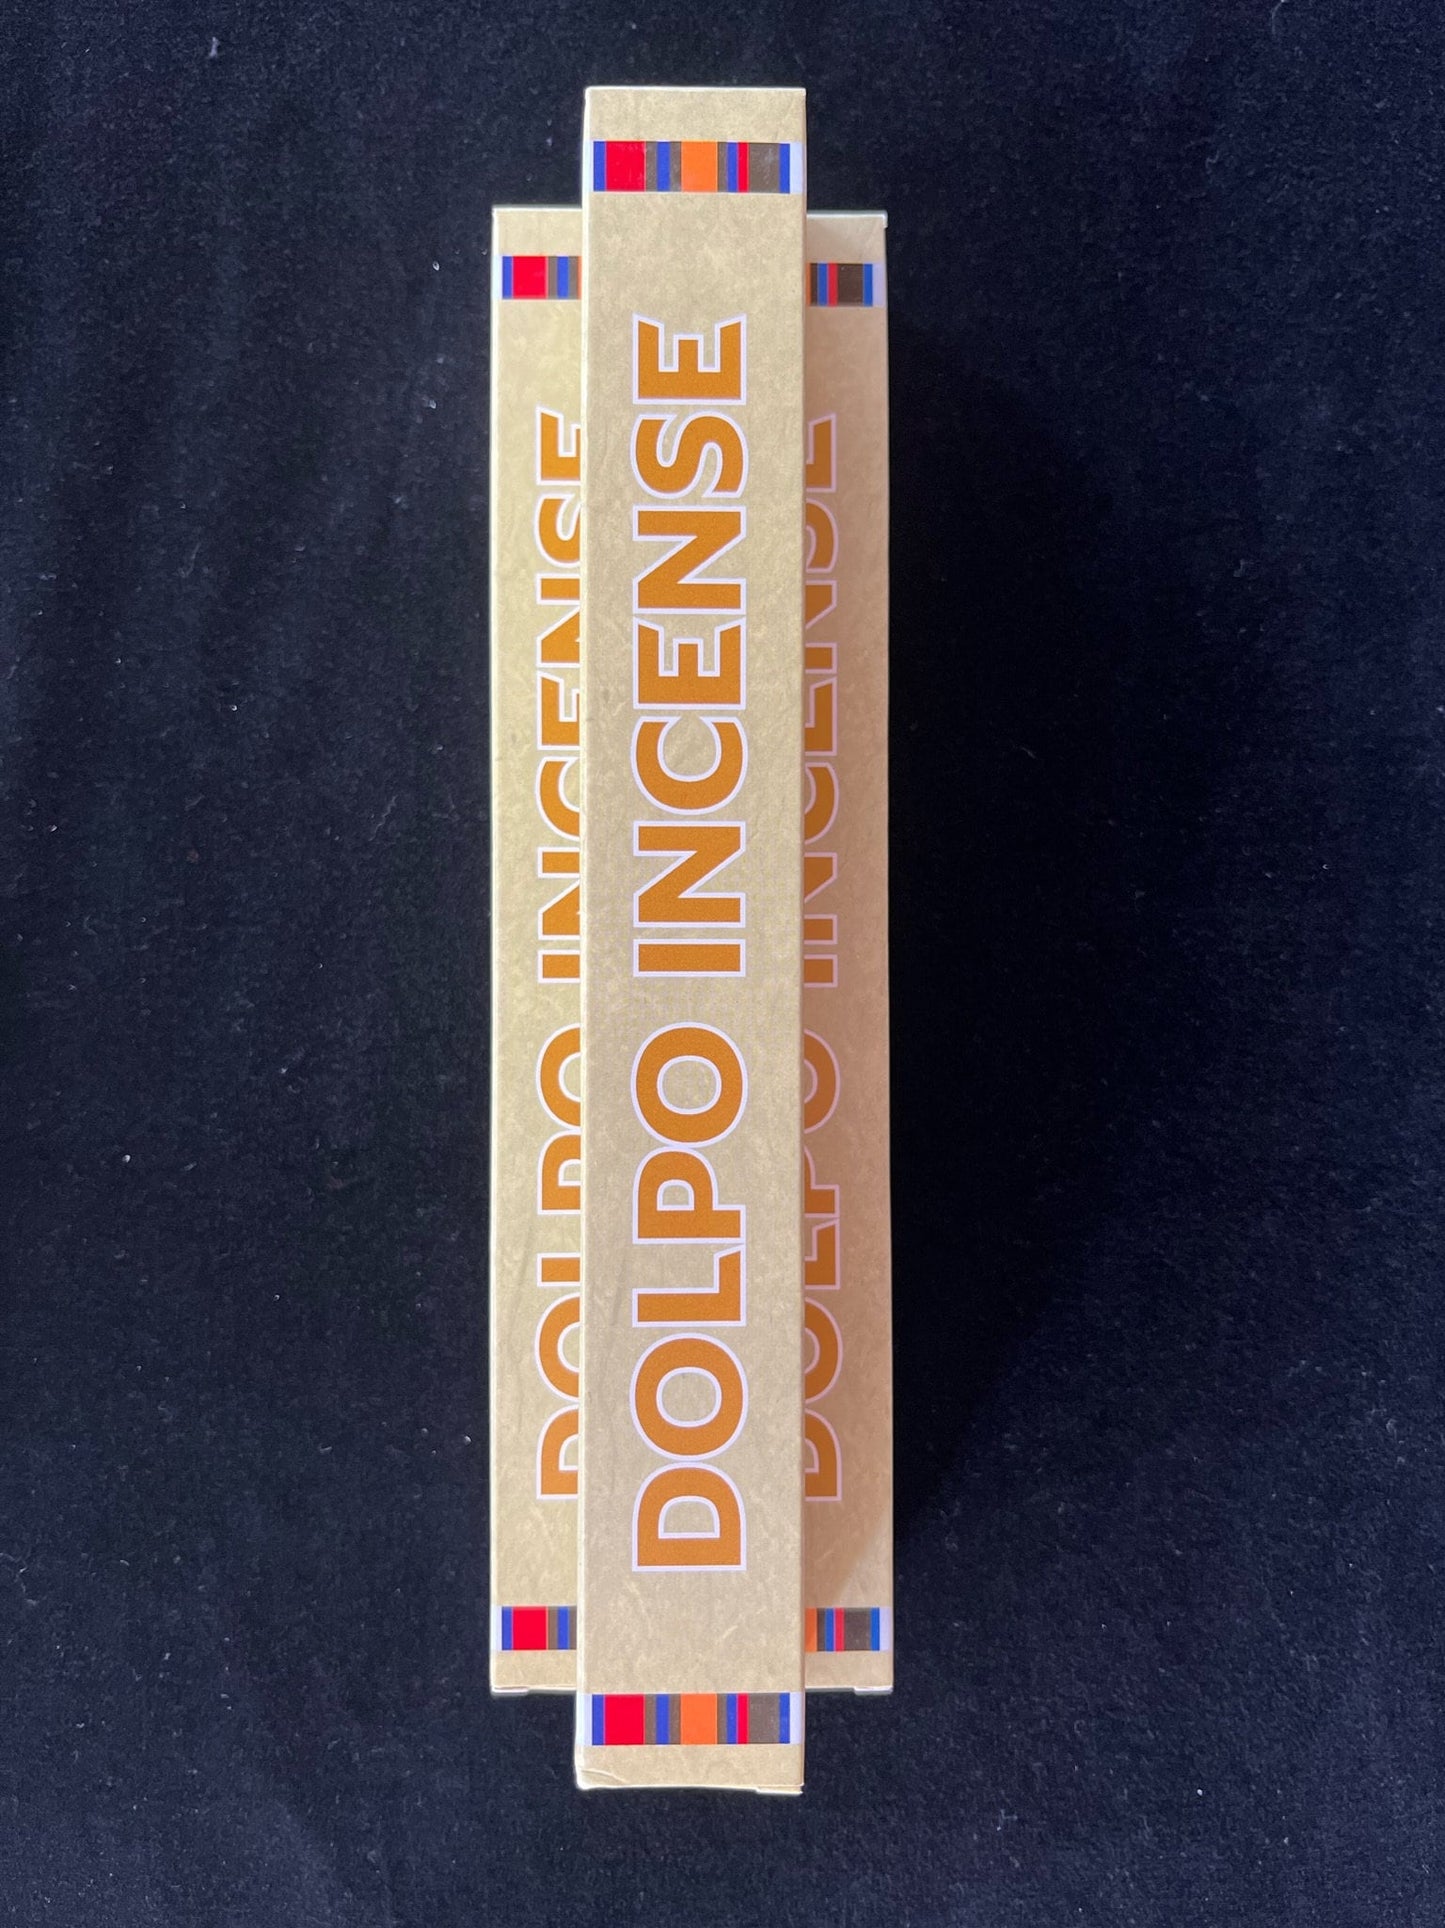 Dolpo Incense  | Tibetan Incense | 23 sticks | 9 inch sticks